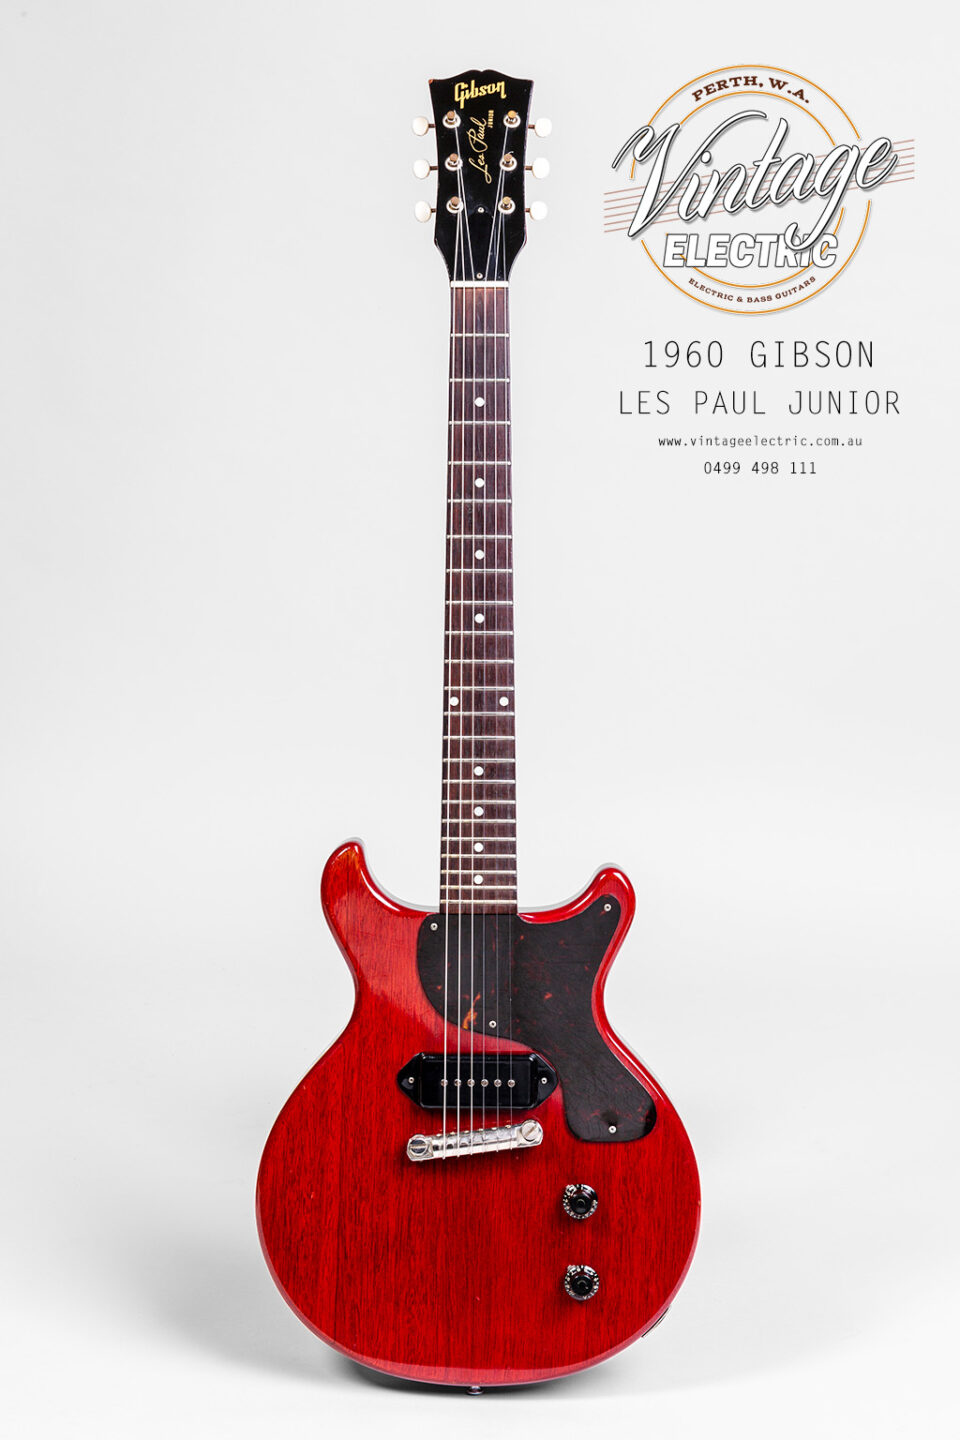 1960 Gibson Les Paul Jr Guitar